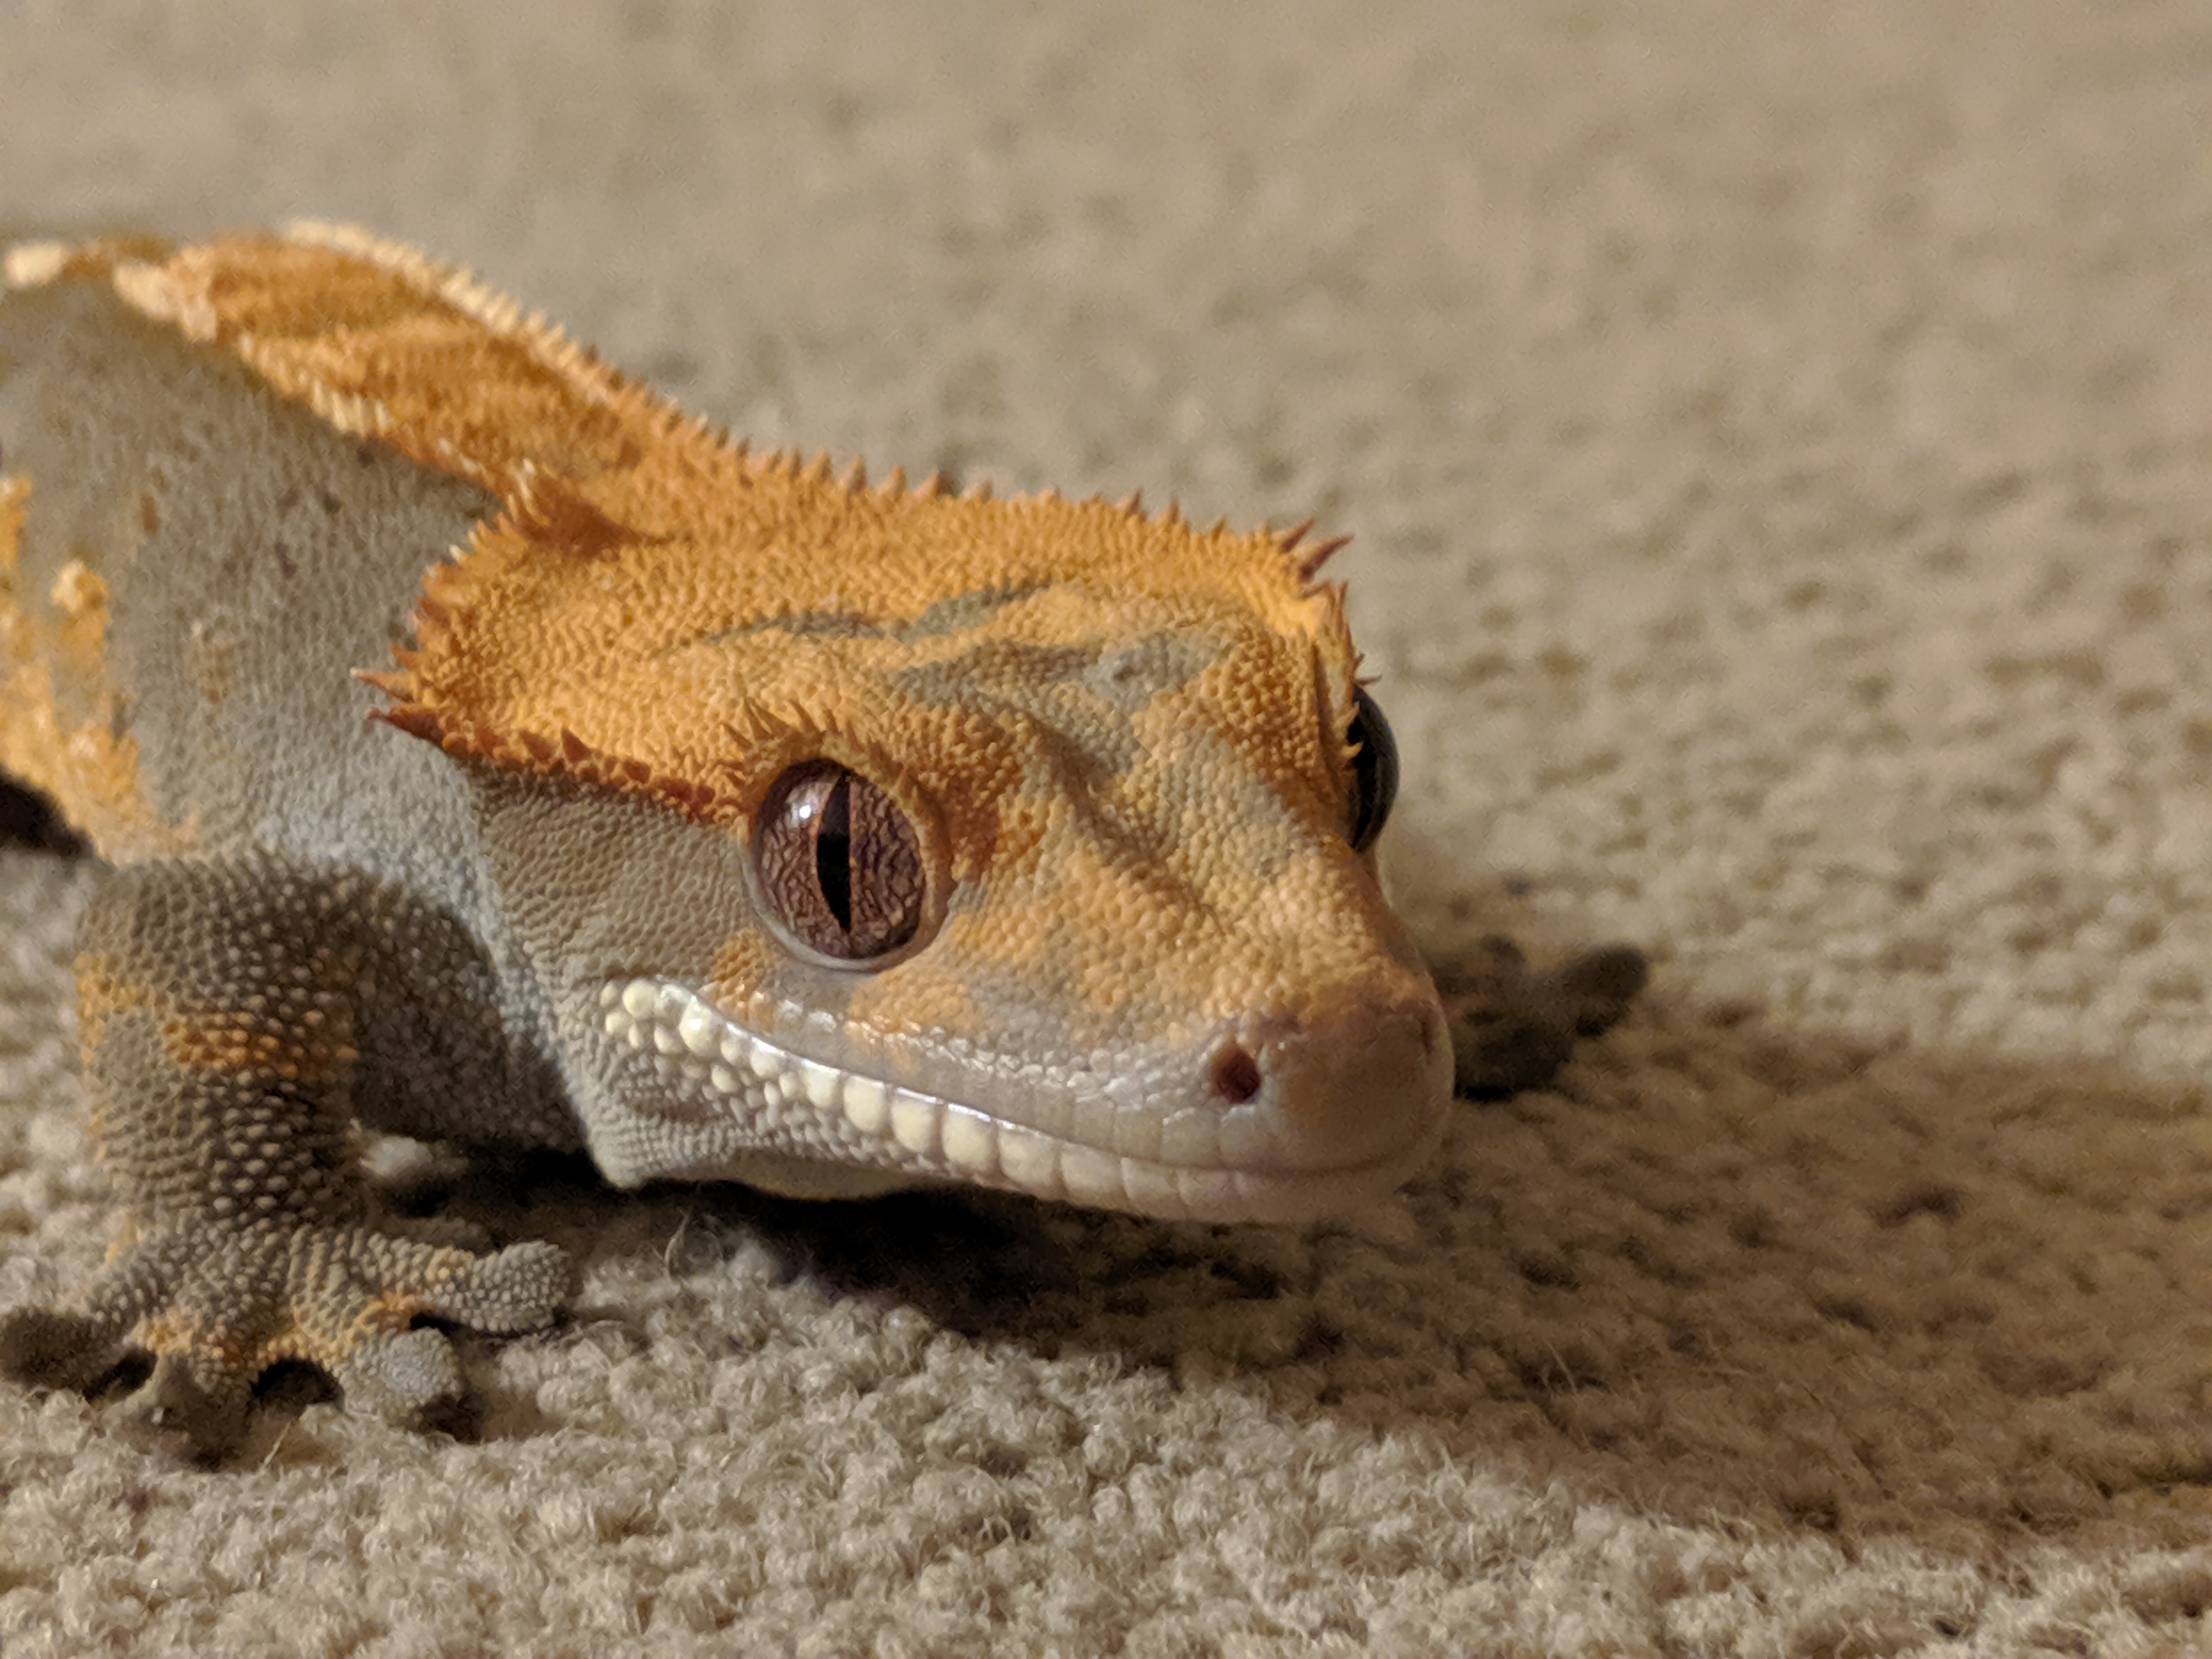  my gecko